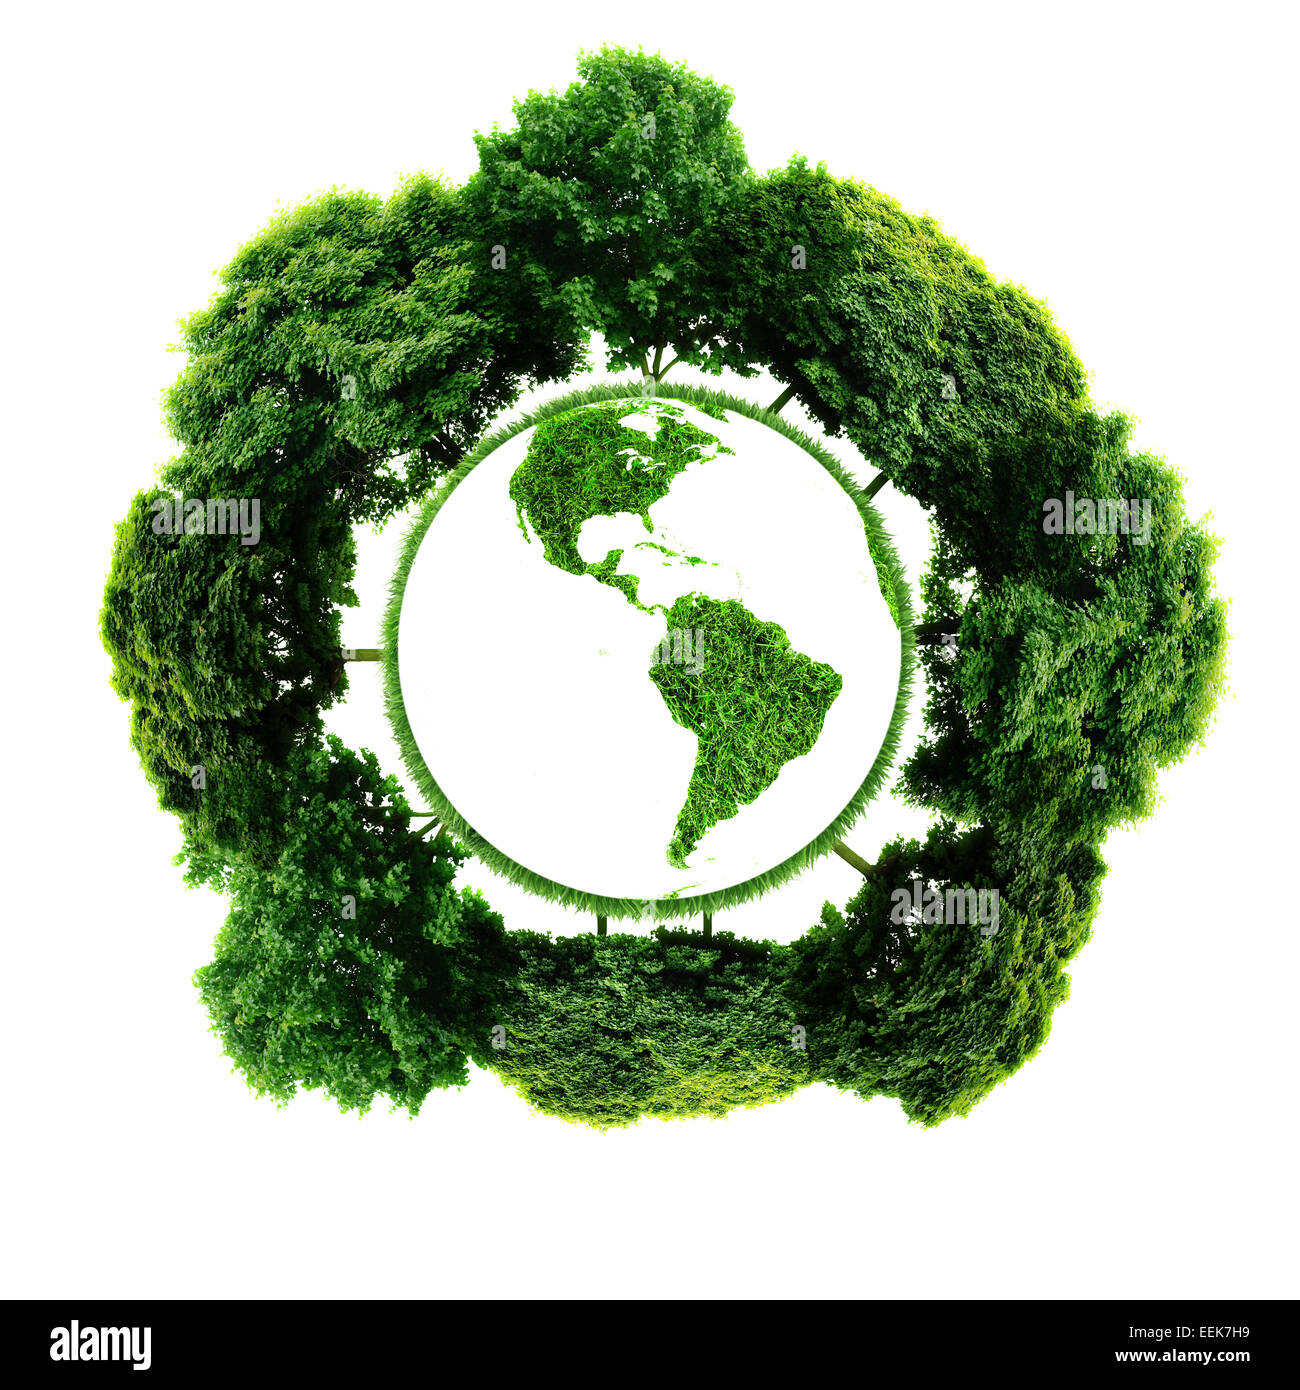 Growing around. Планета с деревьями. Green Earth парк. Фото знак эко вокруг планеты. Фото знак эко вокруг планеты для вырезания.